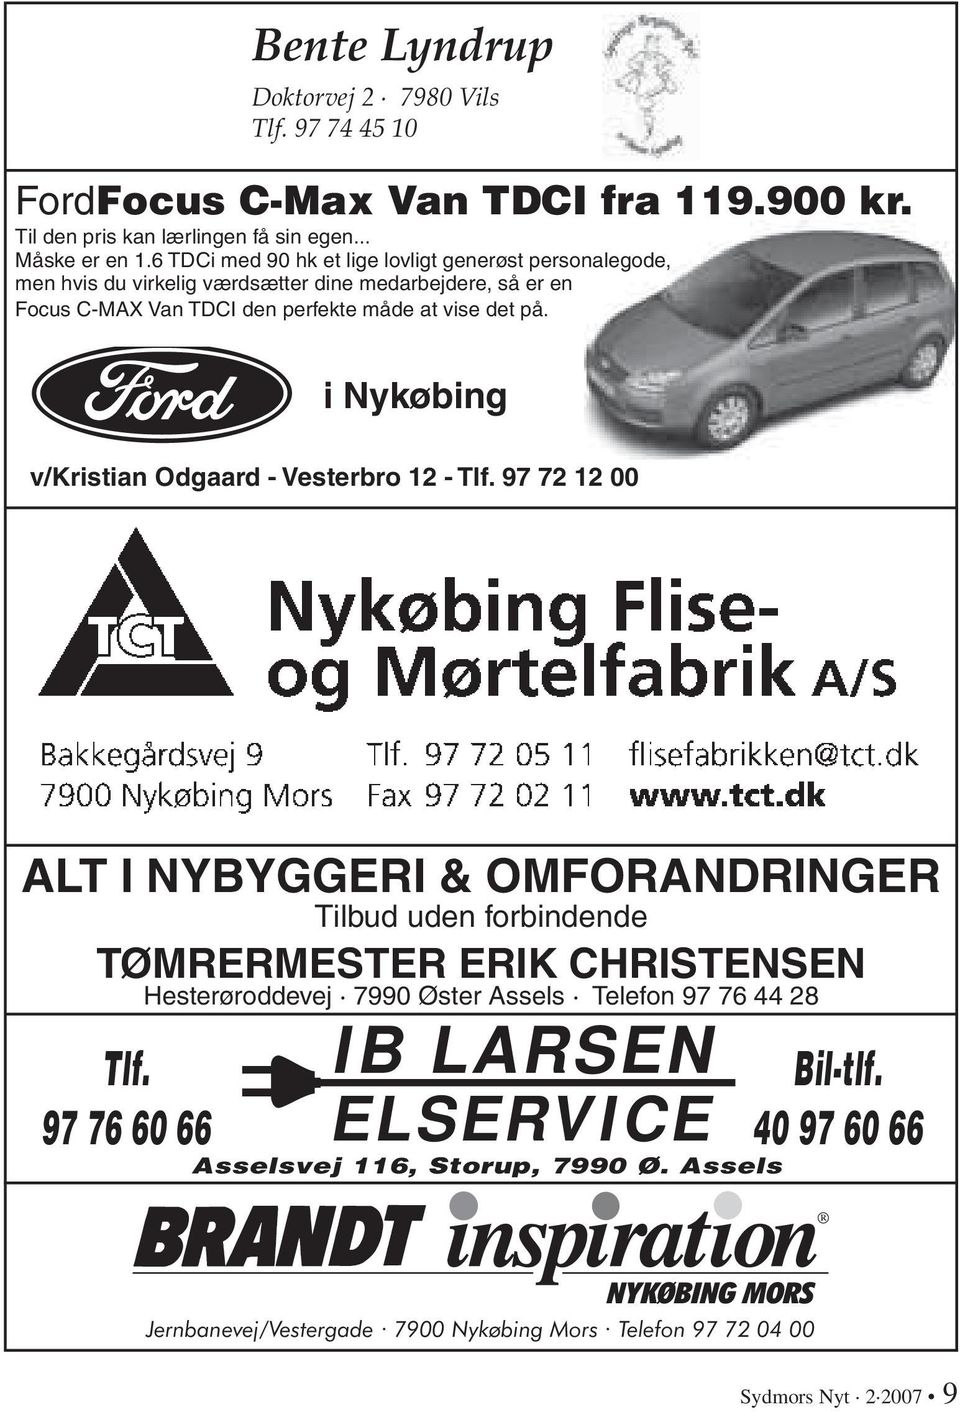 i Nykøbing v/kristian Odgaard - Vesterbro 12 - Tlf.